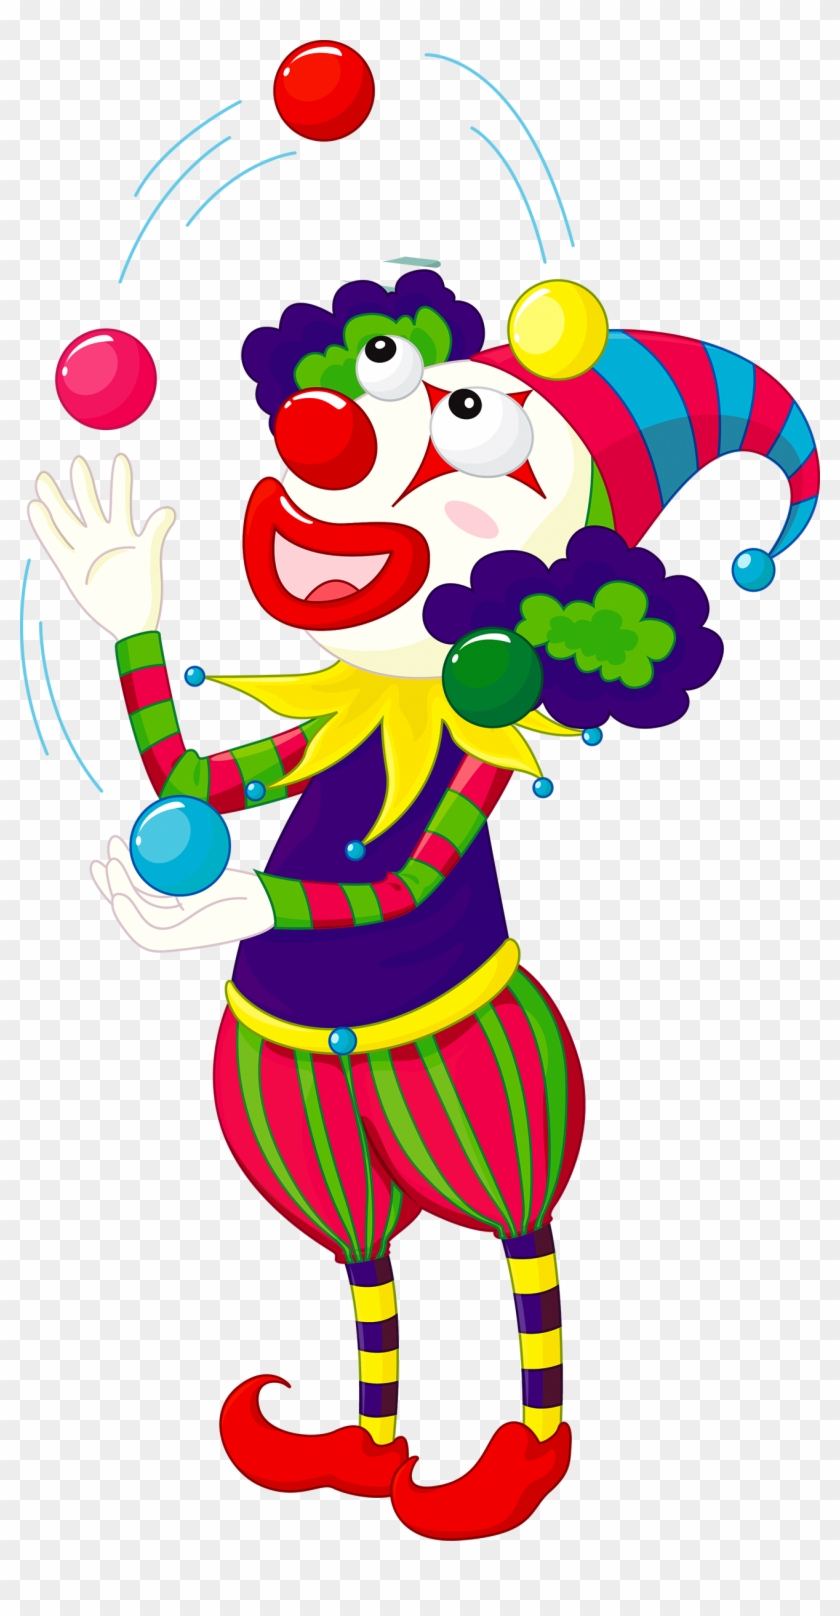 Clown Circus Juggling Illustration - Clown Circus Juggling Illustration ...